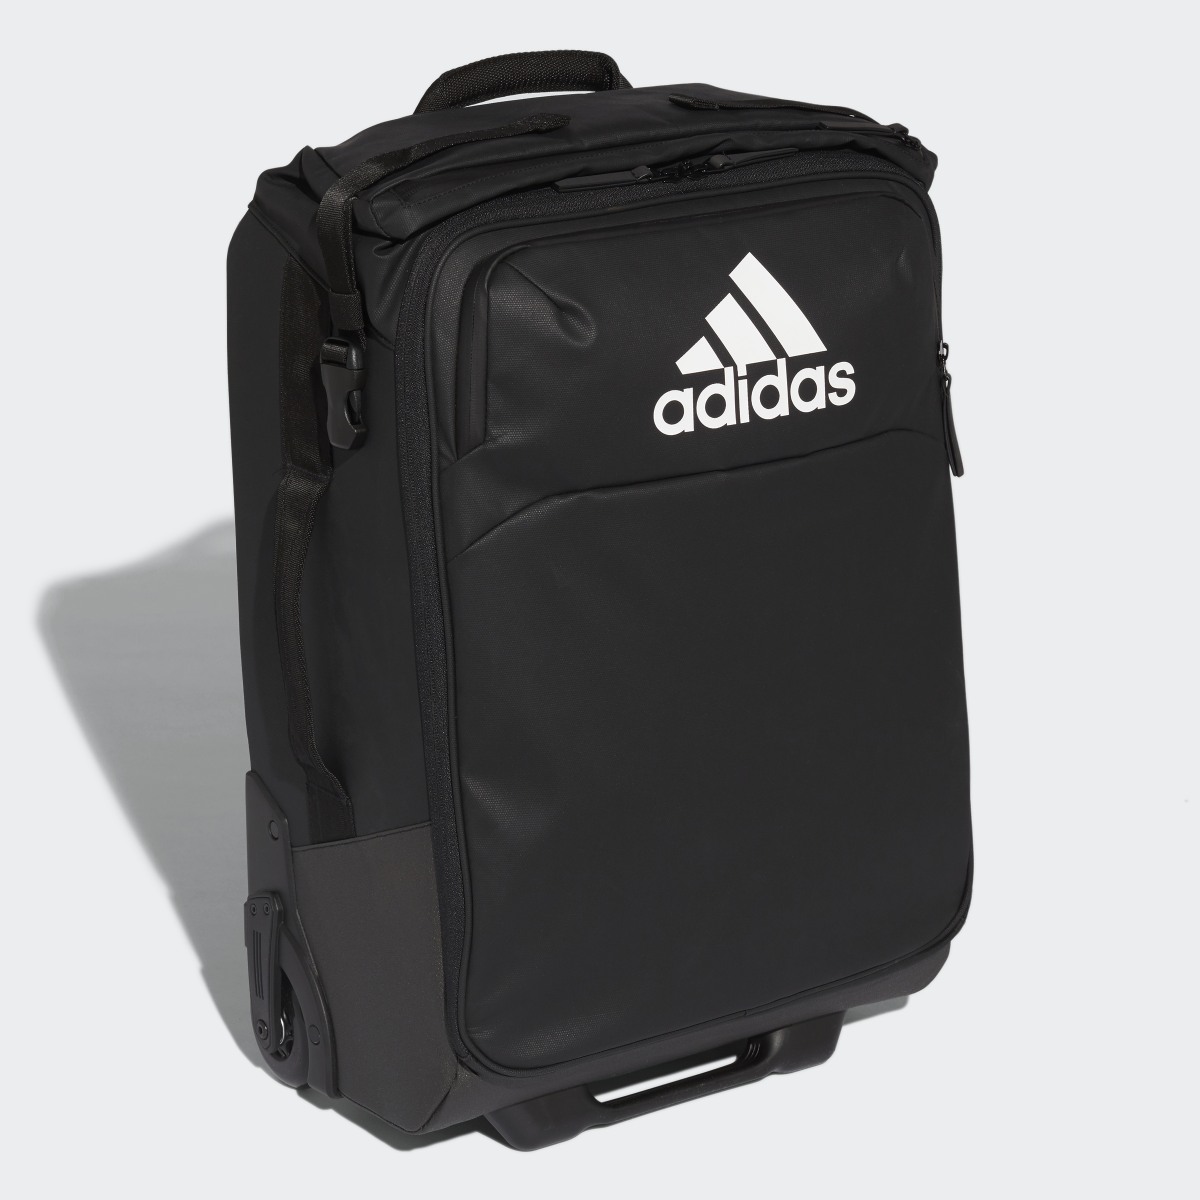 Adidas Roller Bag Small. 4